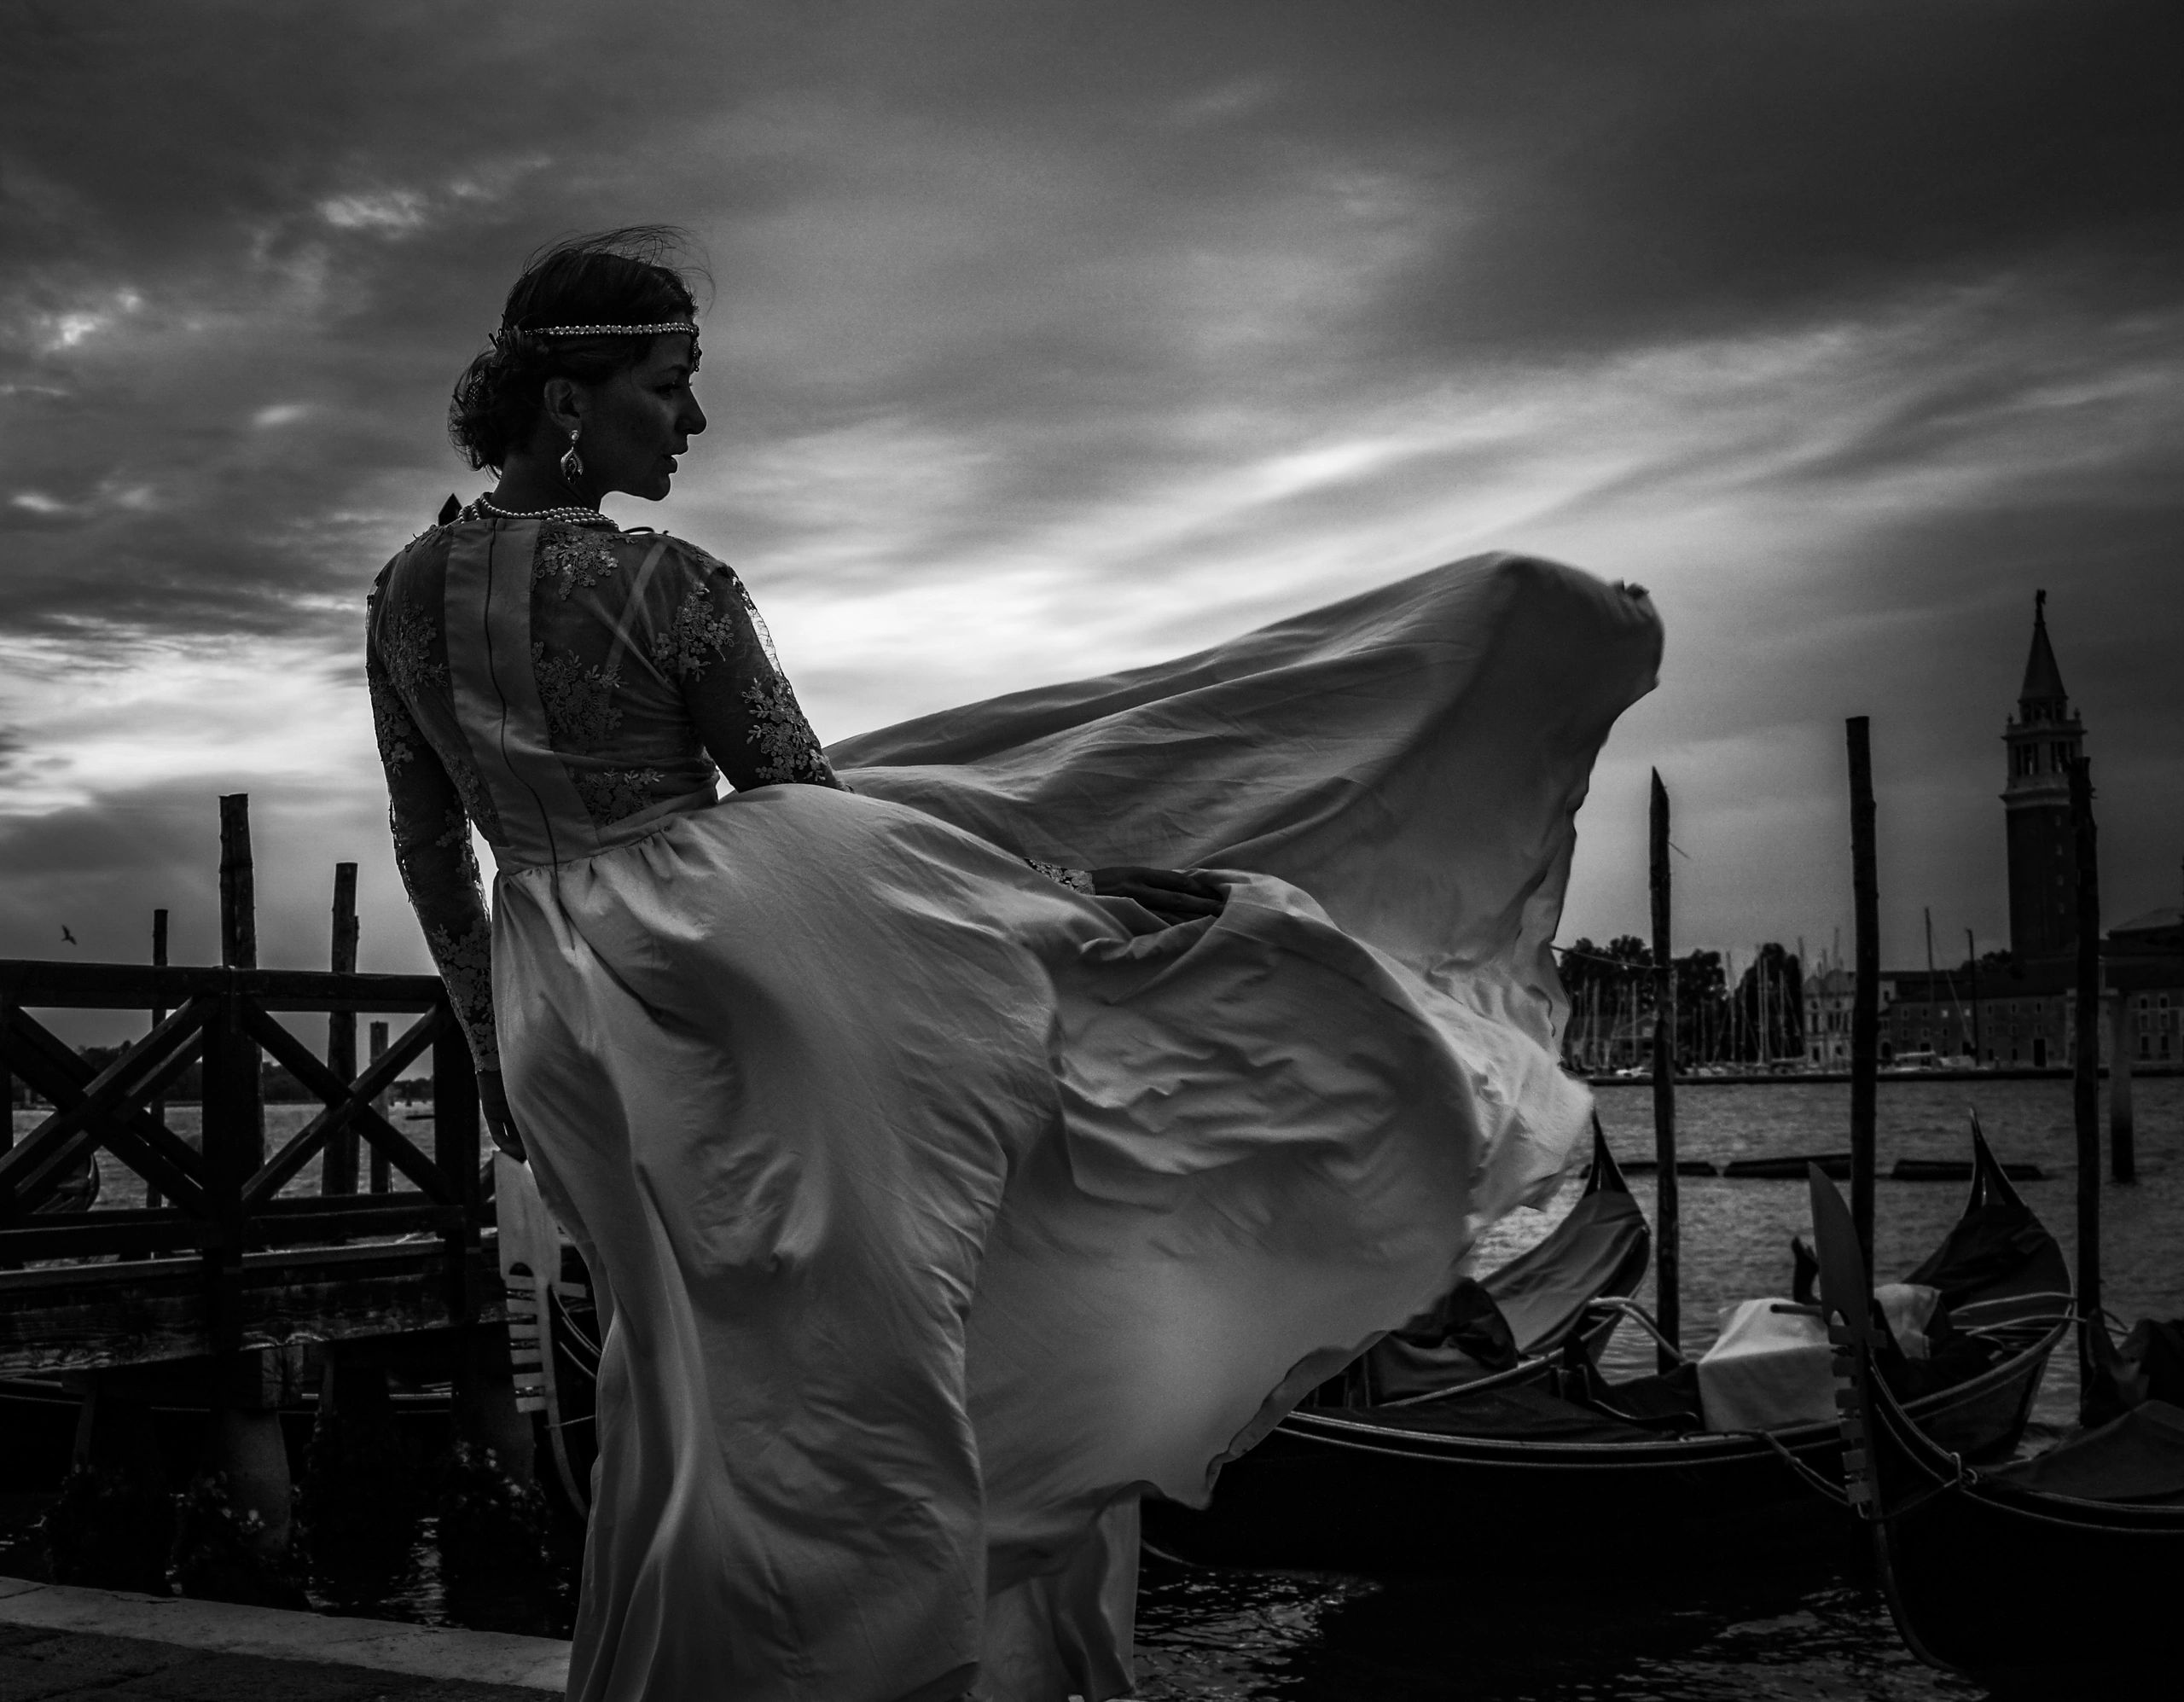 Venice, Italy 2019. Model: Svetlana Anzak
Photography by Matt Anzak